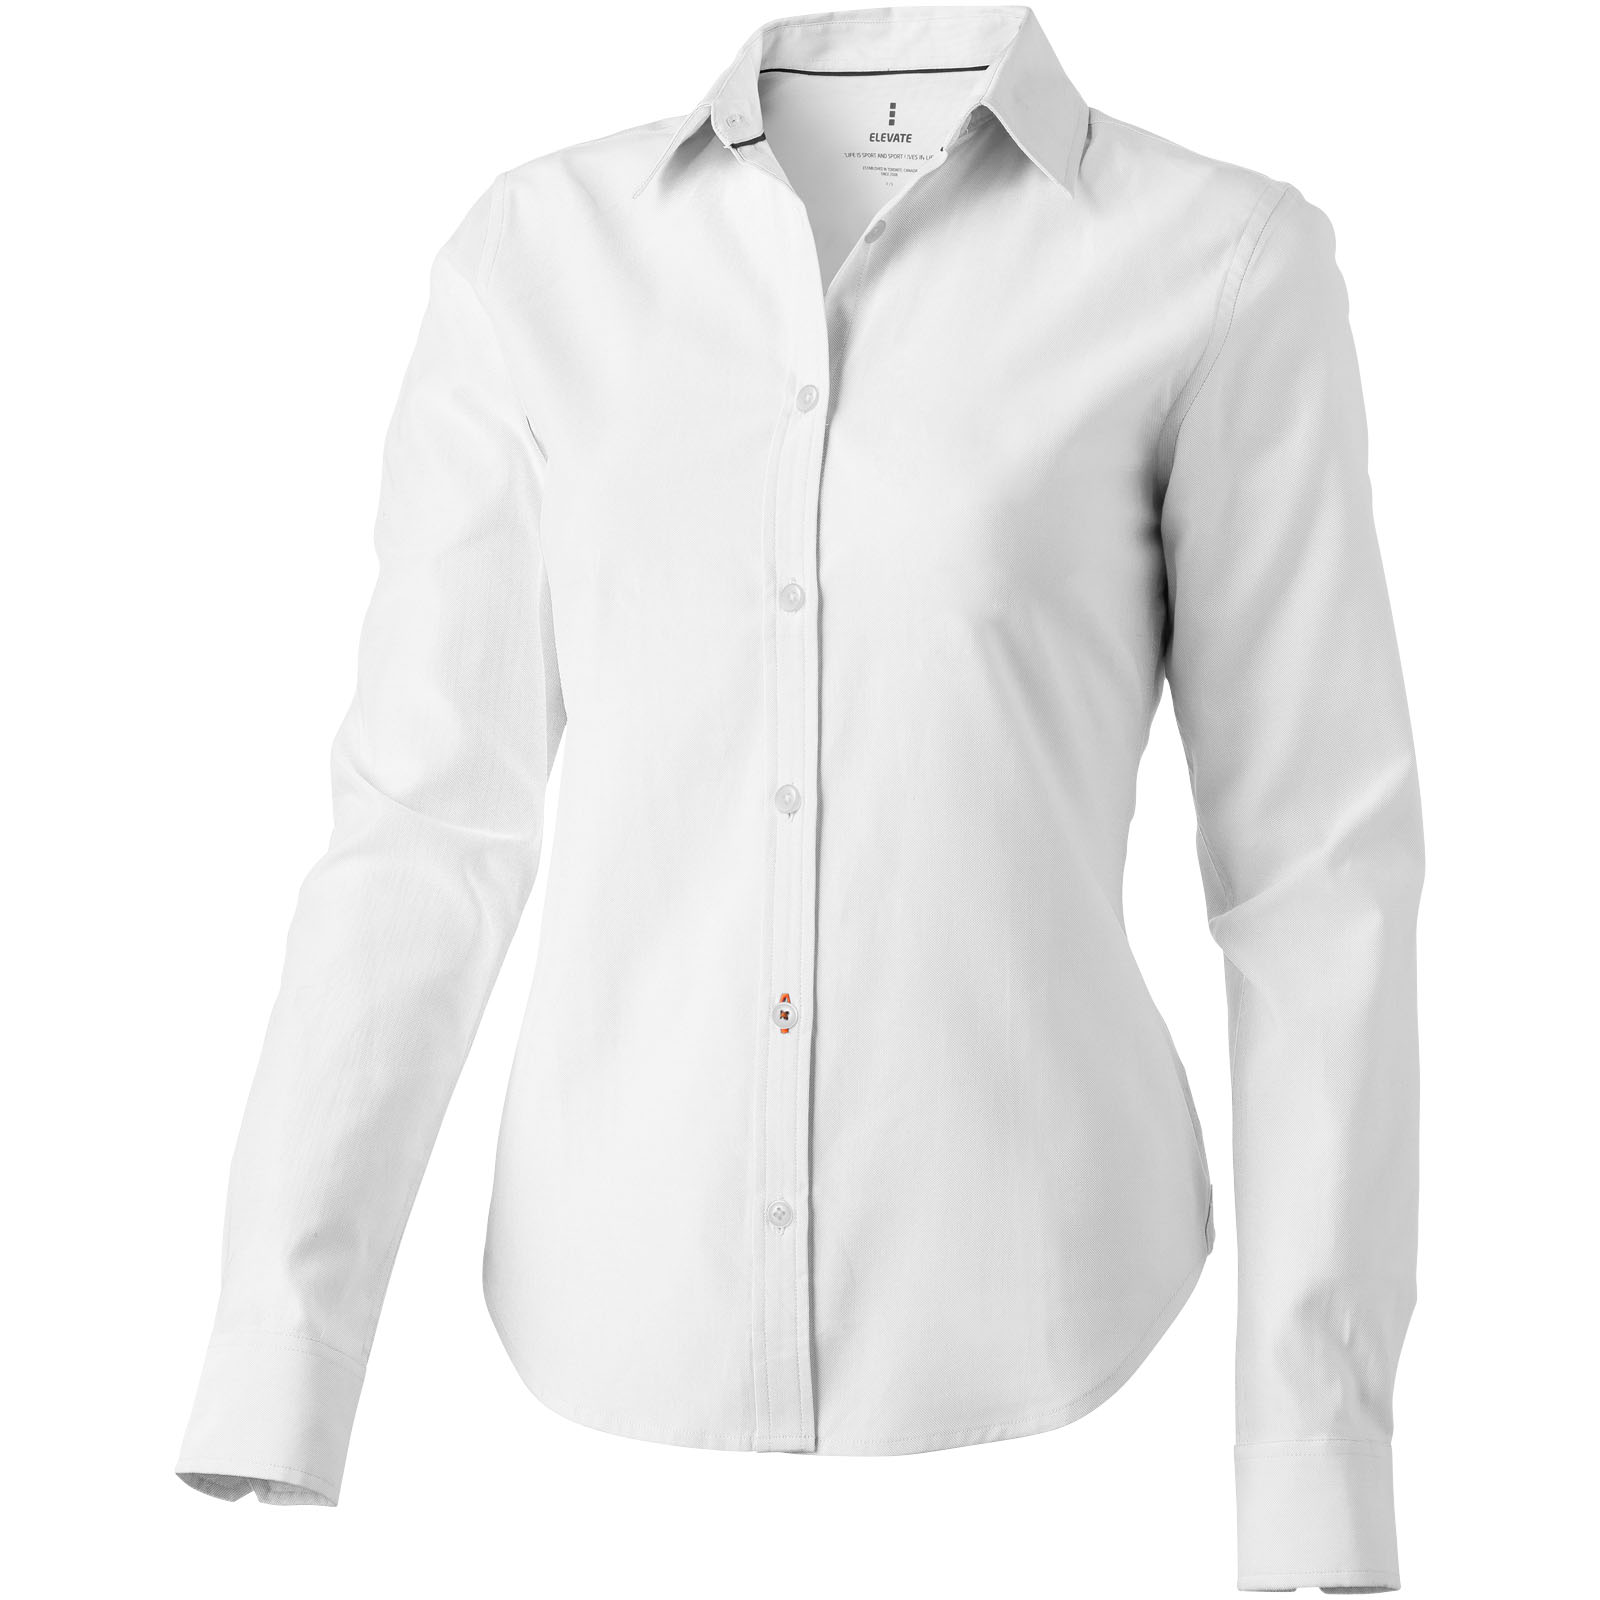 Clothing - Vaillant long sleeve women's oxford shirt